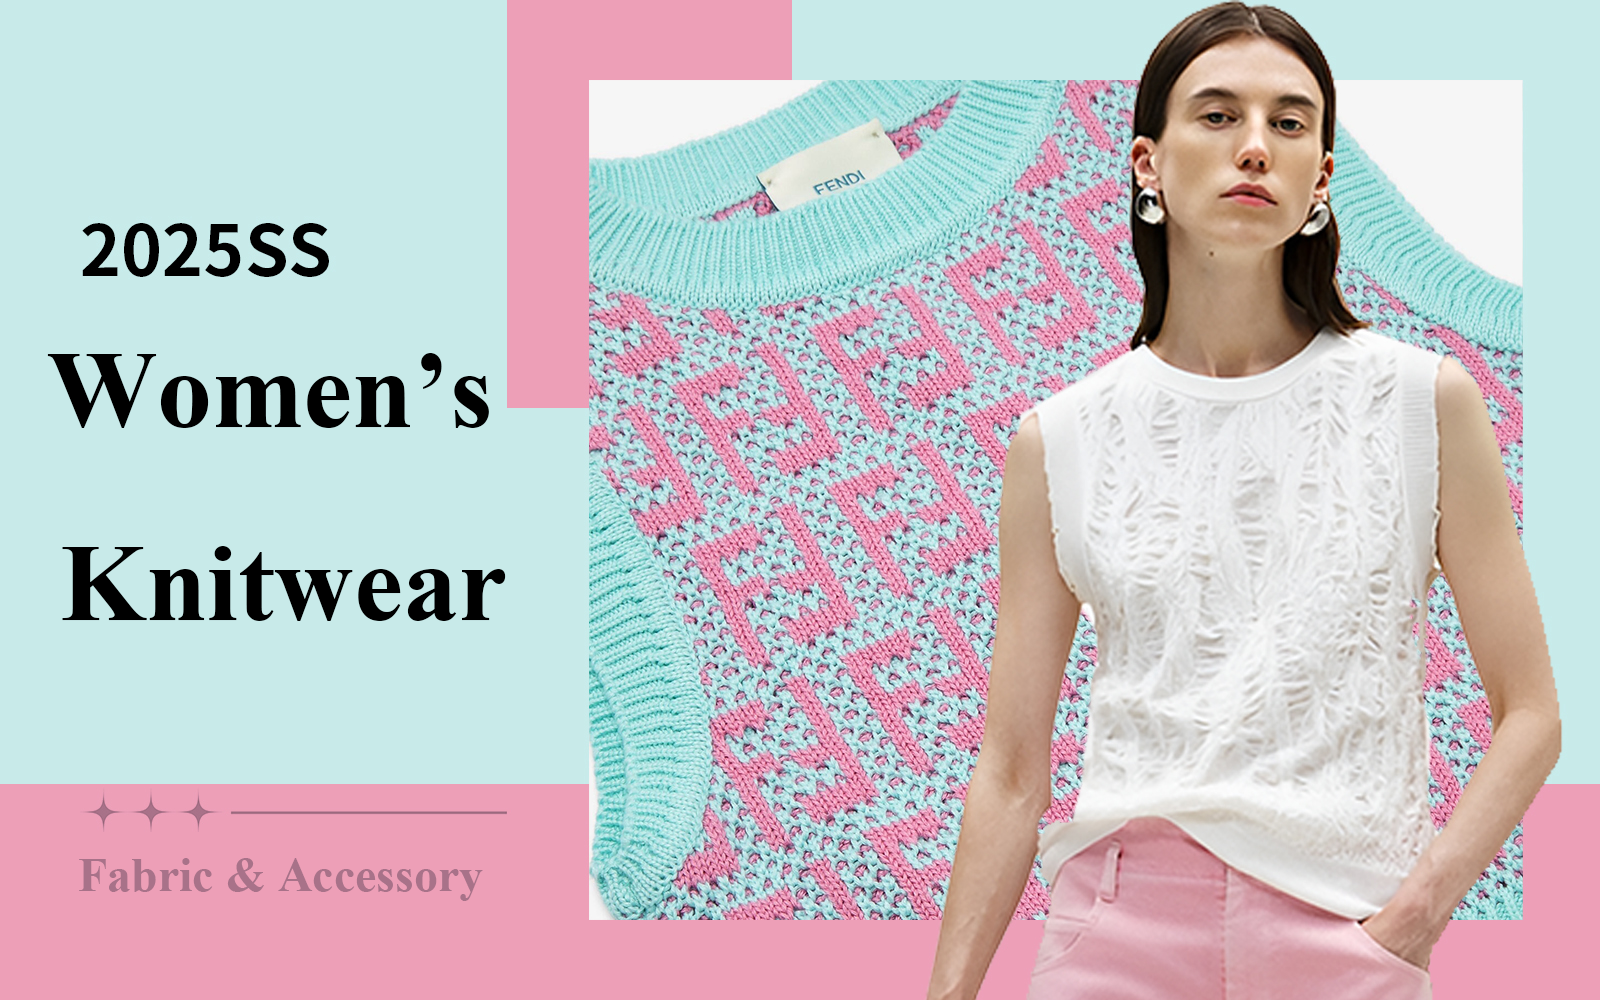 Spring/Summer 2025 Stitch Trend for Women's Knitwear